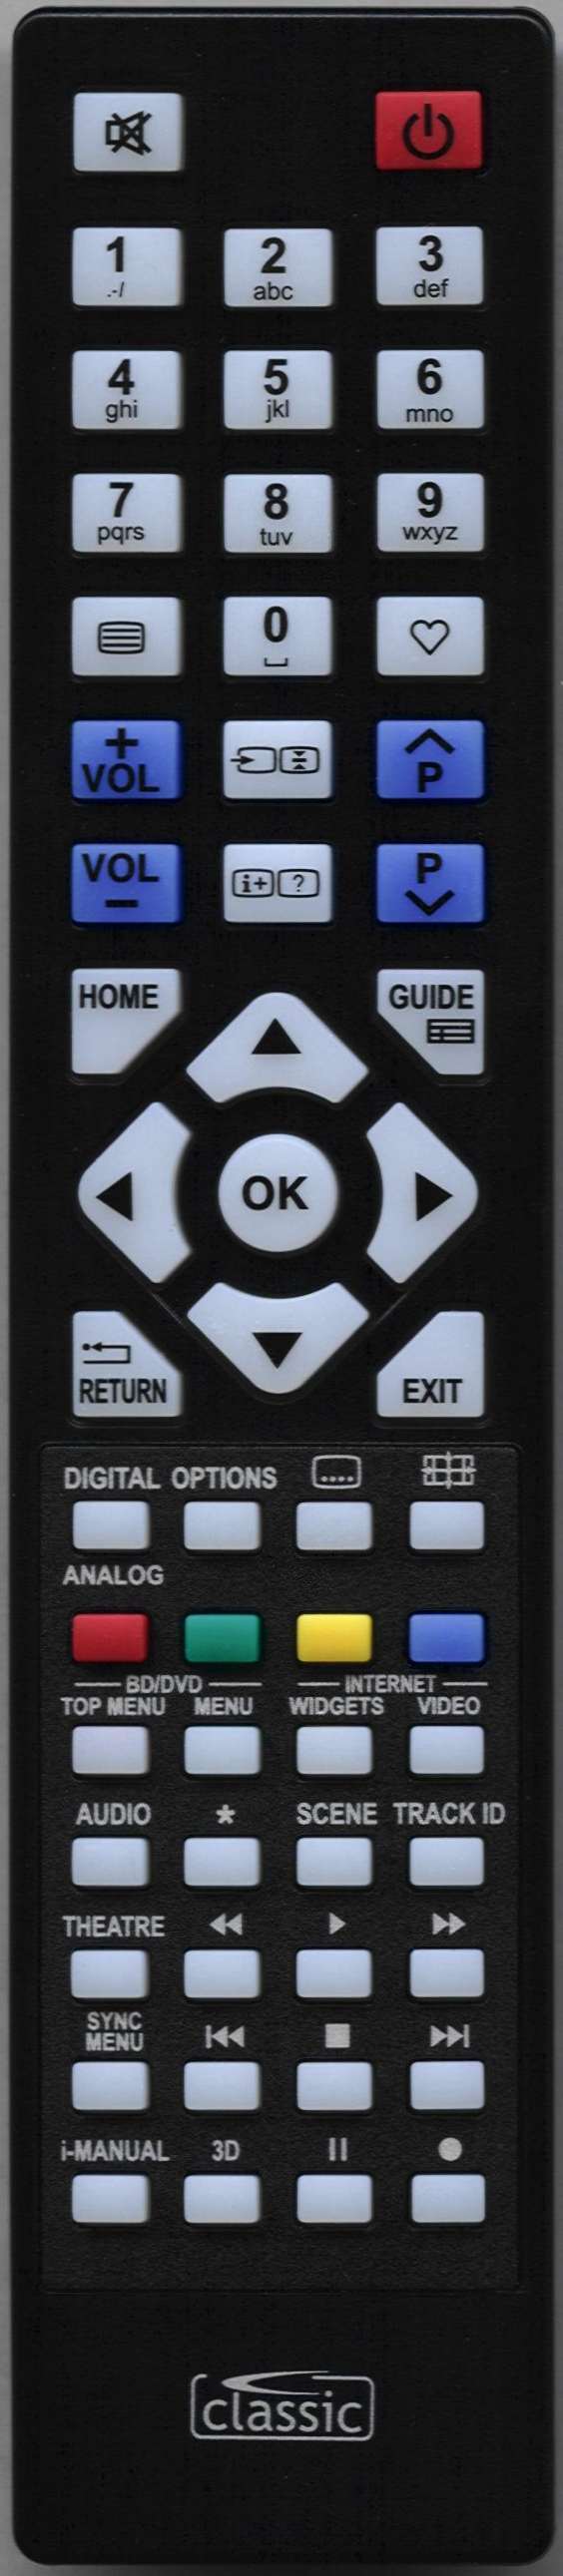 SONY KDL40EX503 Remote Control